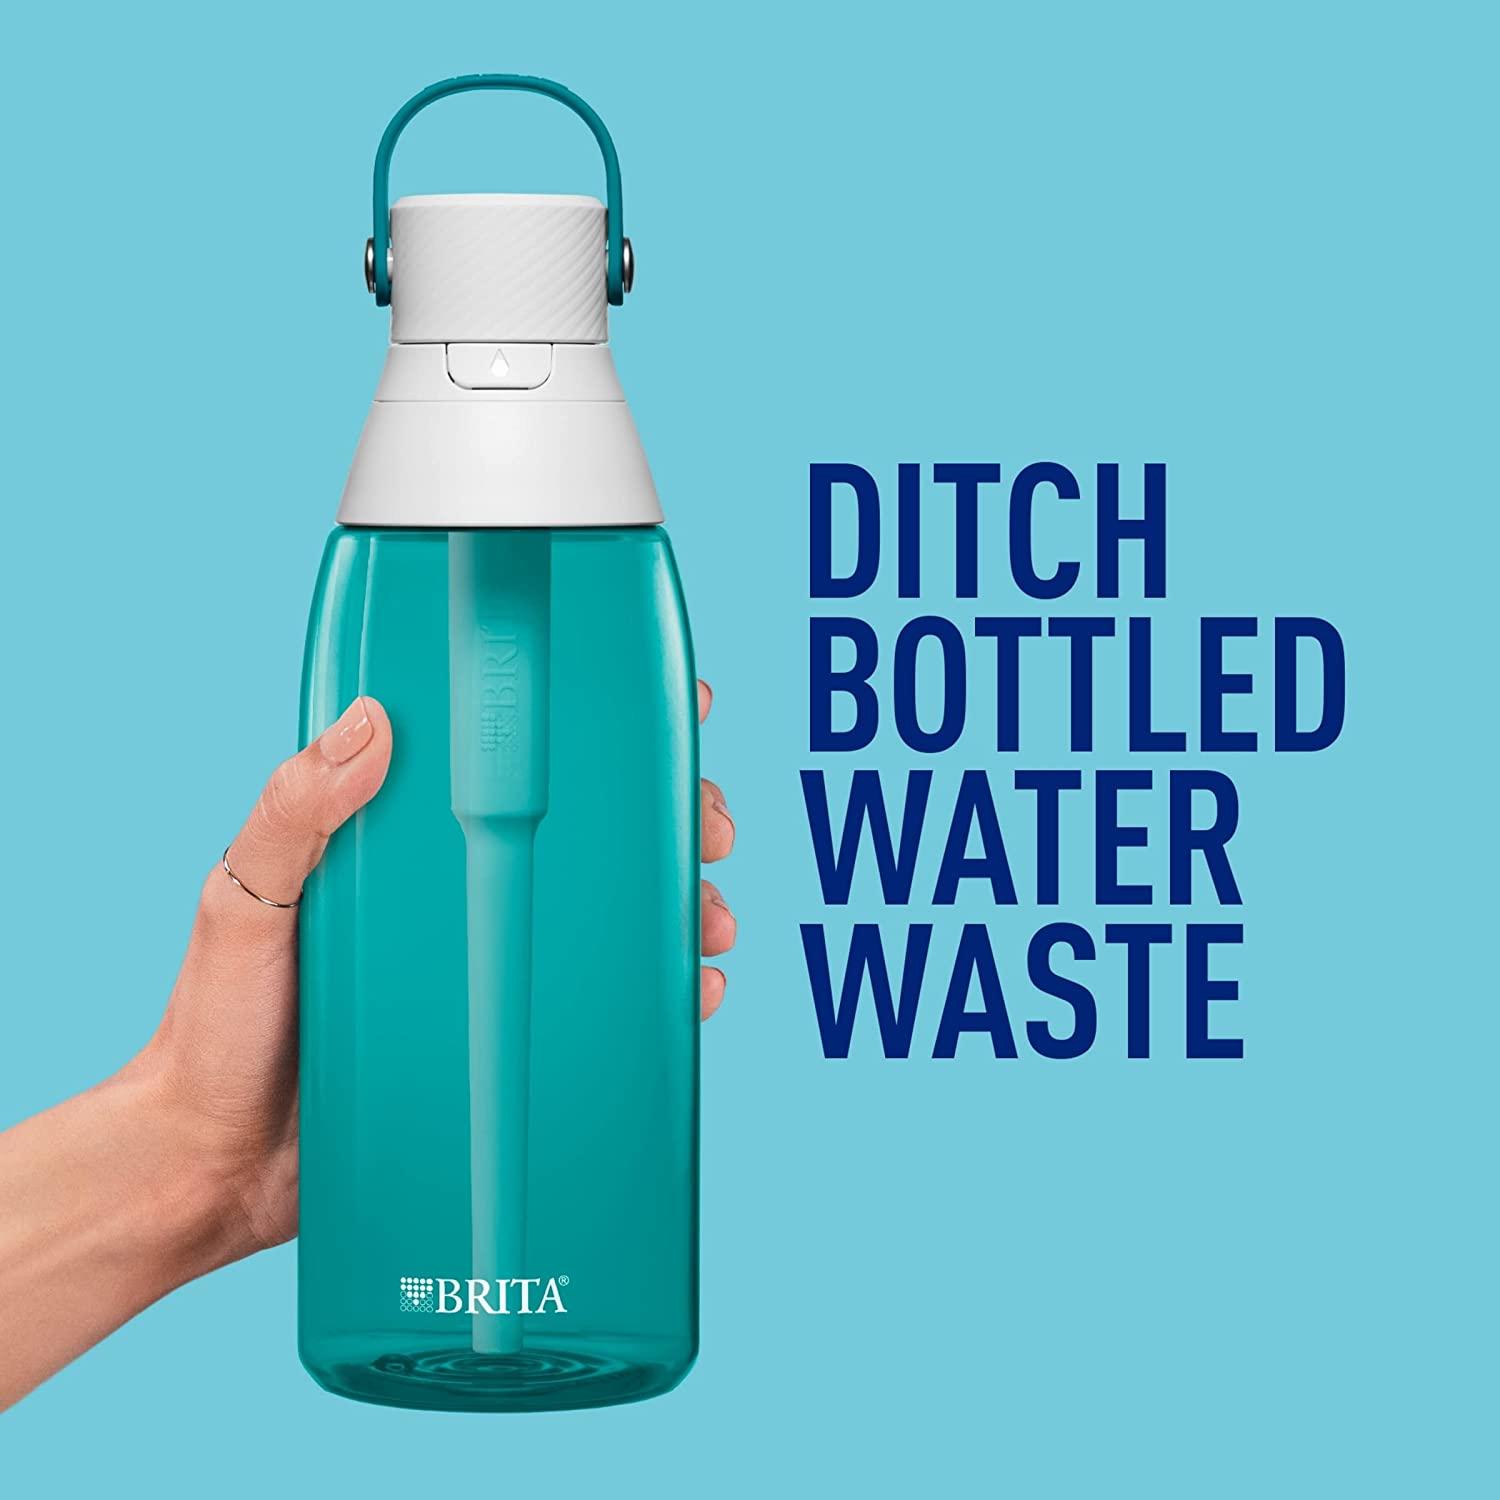 MIRA Reusable Tritan Water Bottle, BPA-Free Plastic Sports Water Bottle